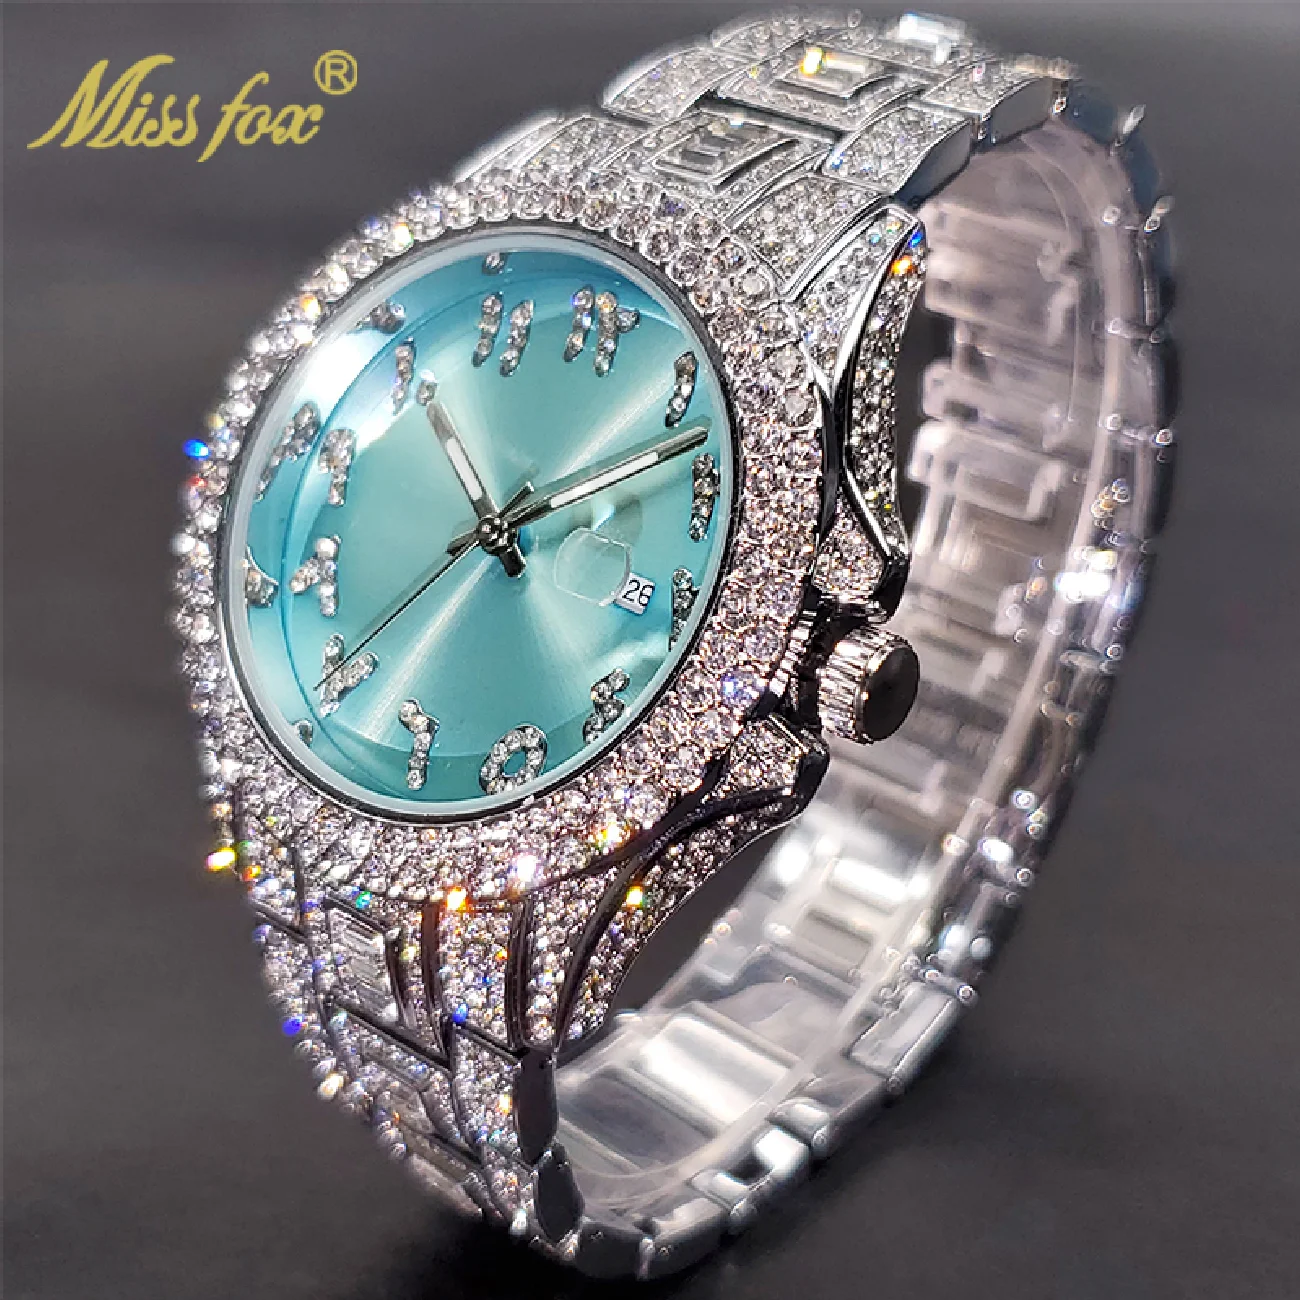 

MISSFOX Fashion Brand Street Style Hip Hop Unisex Quartz Watches Shiny Diamond Timepieces Wedding Party Jewelry New Dropshipping